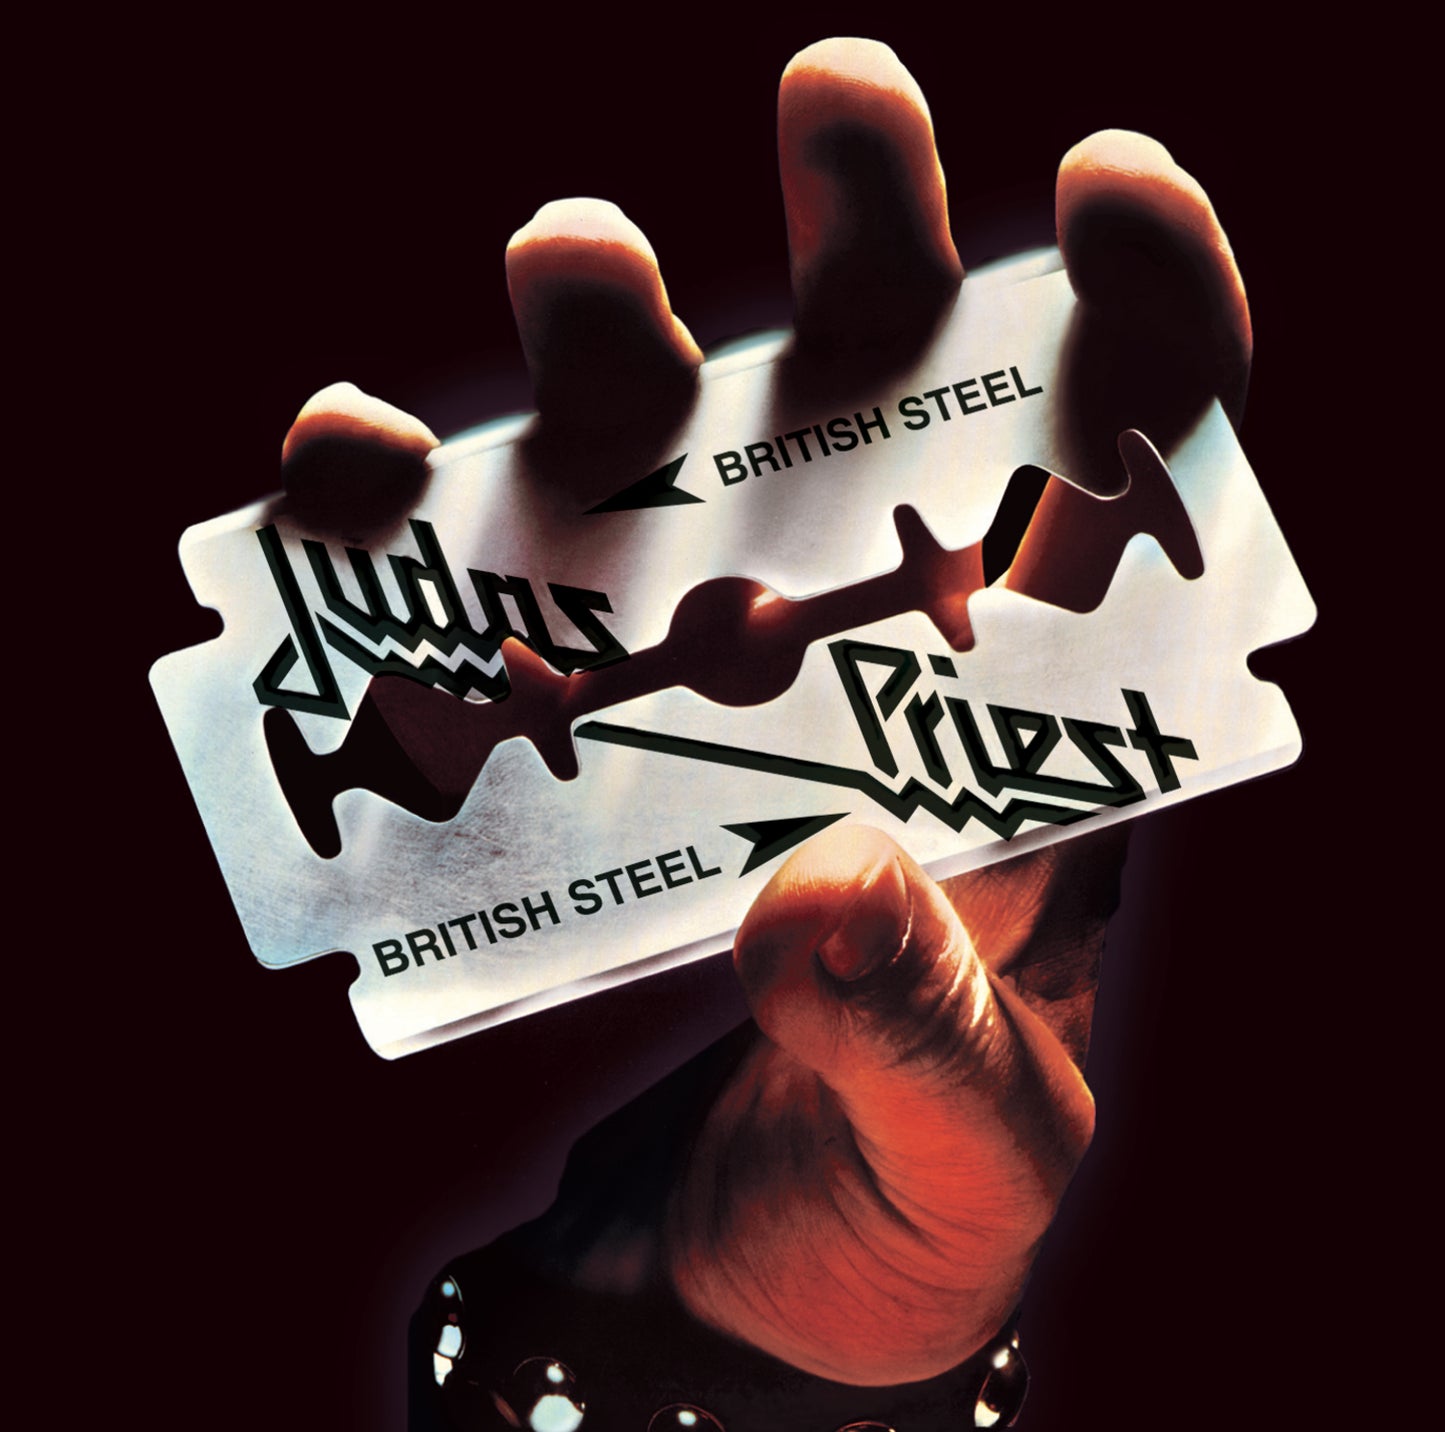 CD - Judas Priest - British Steel